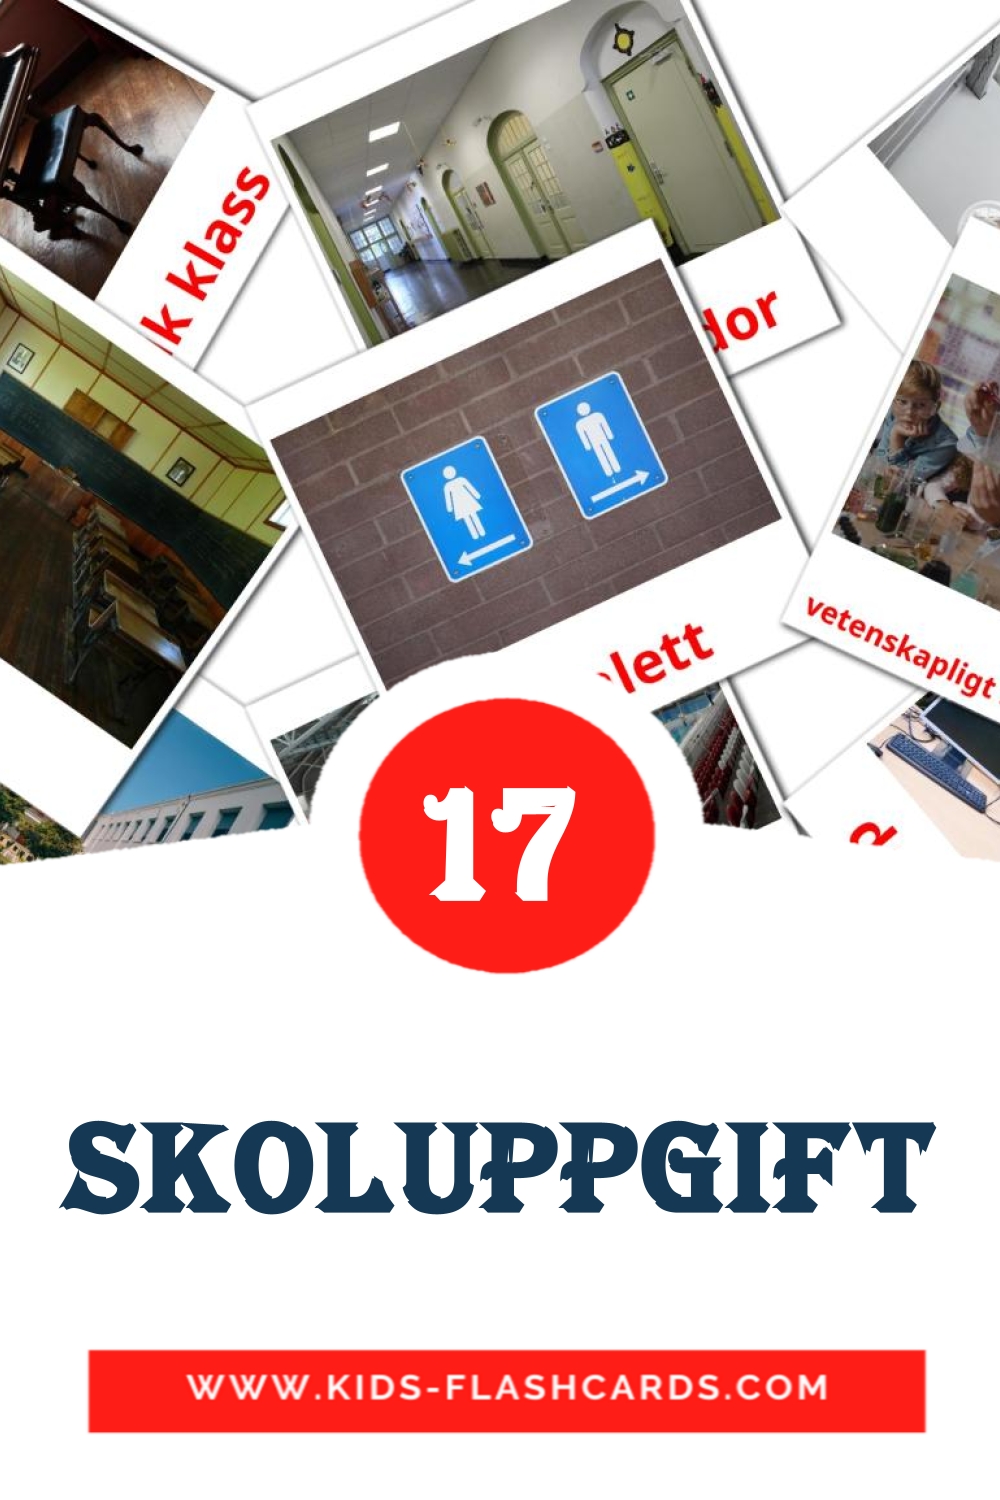 17 carte illustrate di Skoluppgift per la scuola materna in svedese